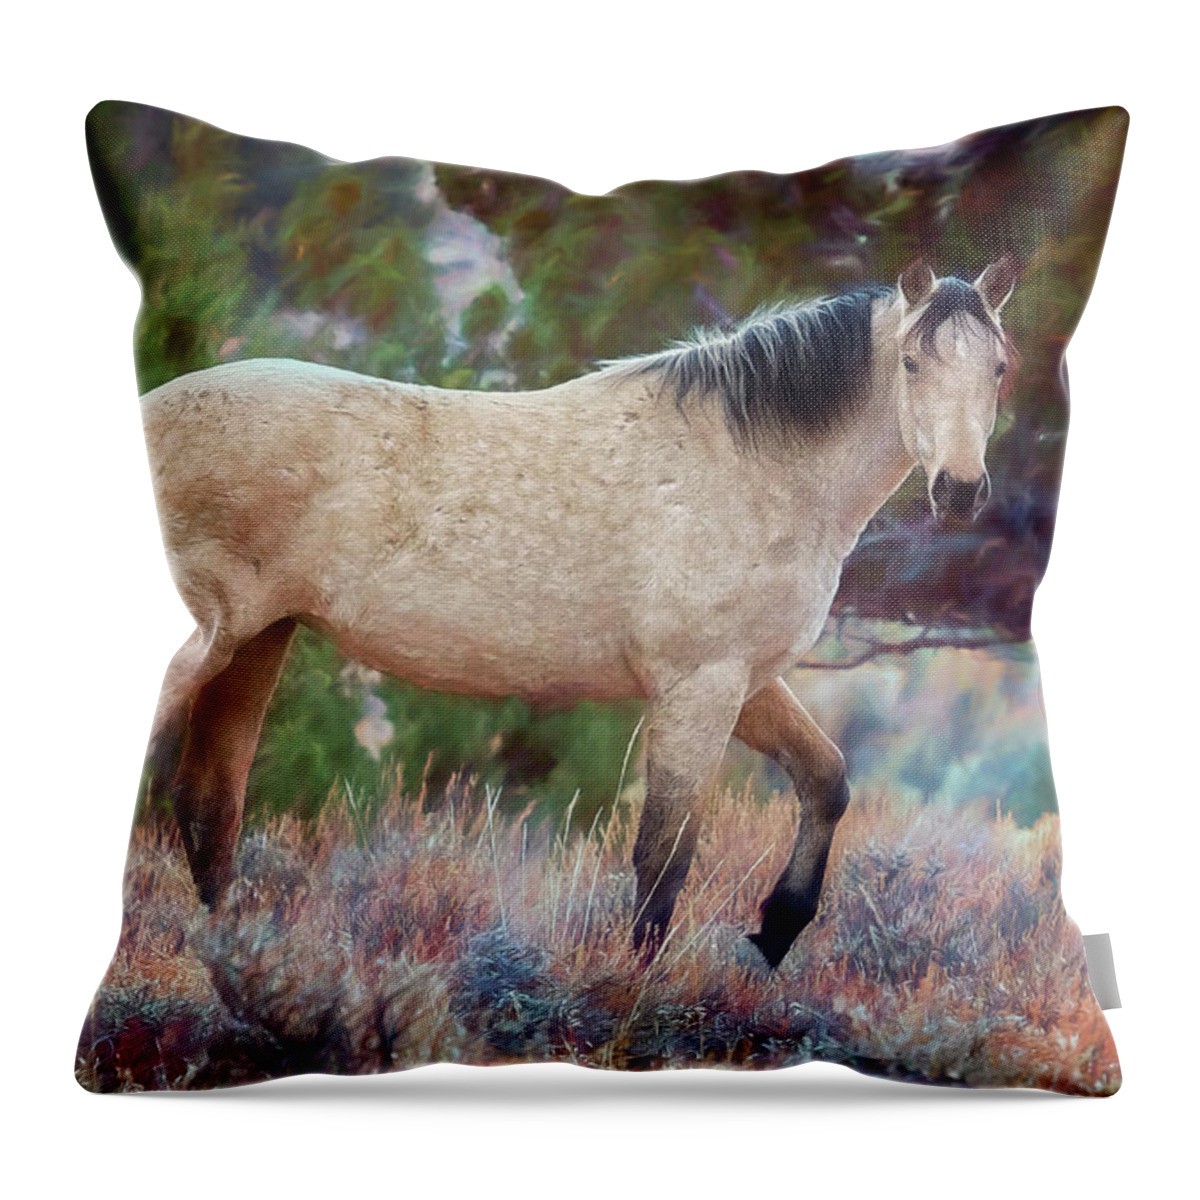 Wild Horse Throw Pillow featuring the photograph Beautiful Buckskin by Belinda Greb